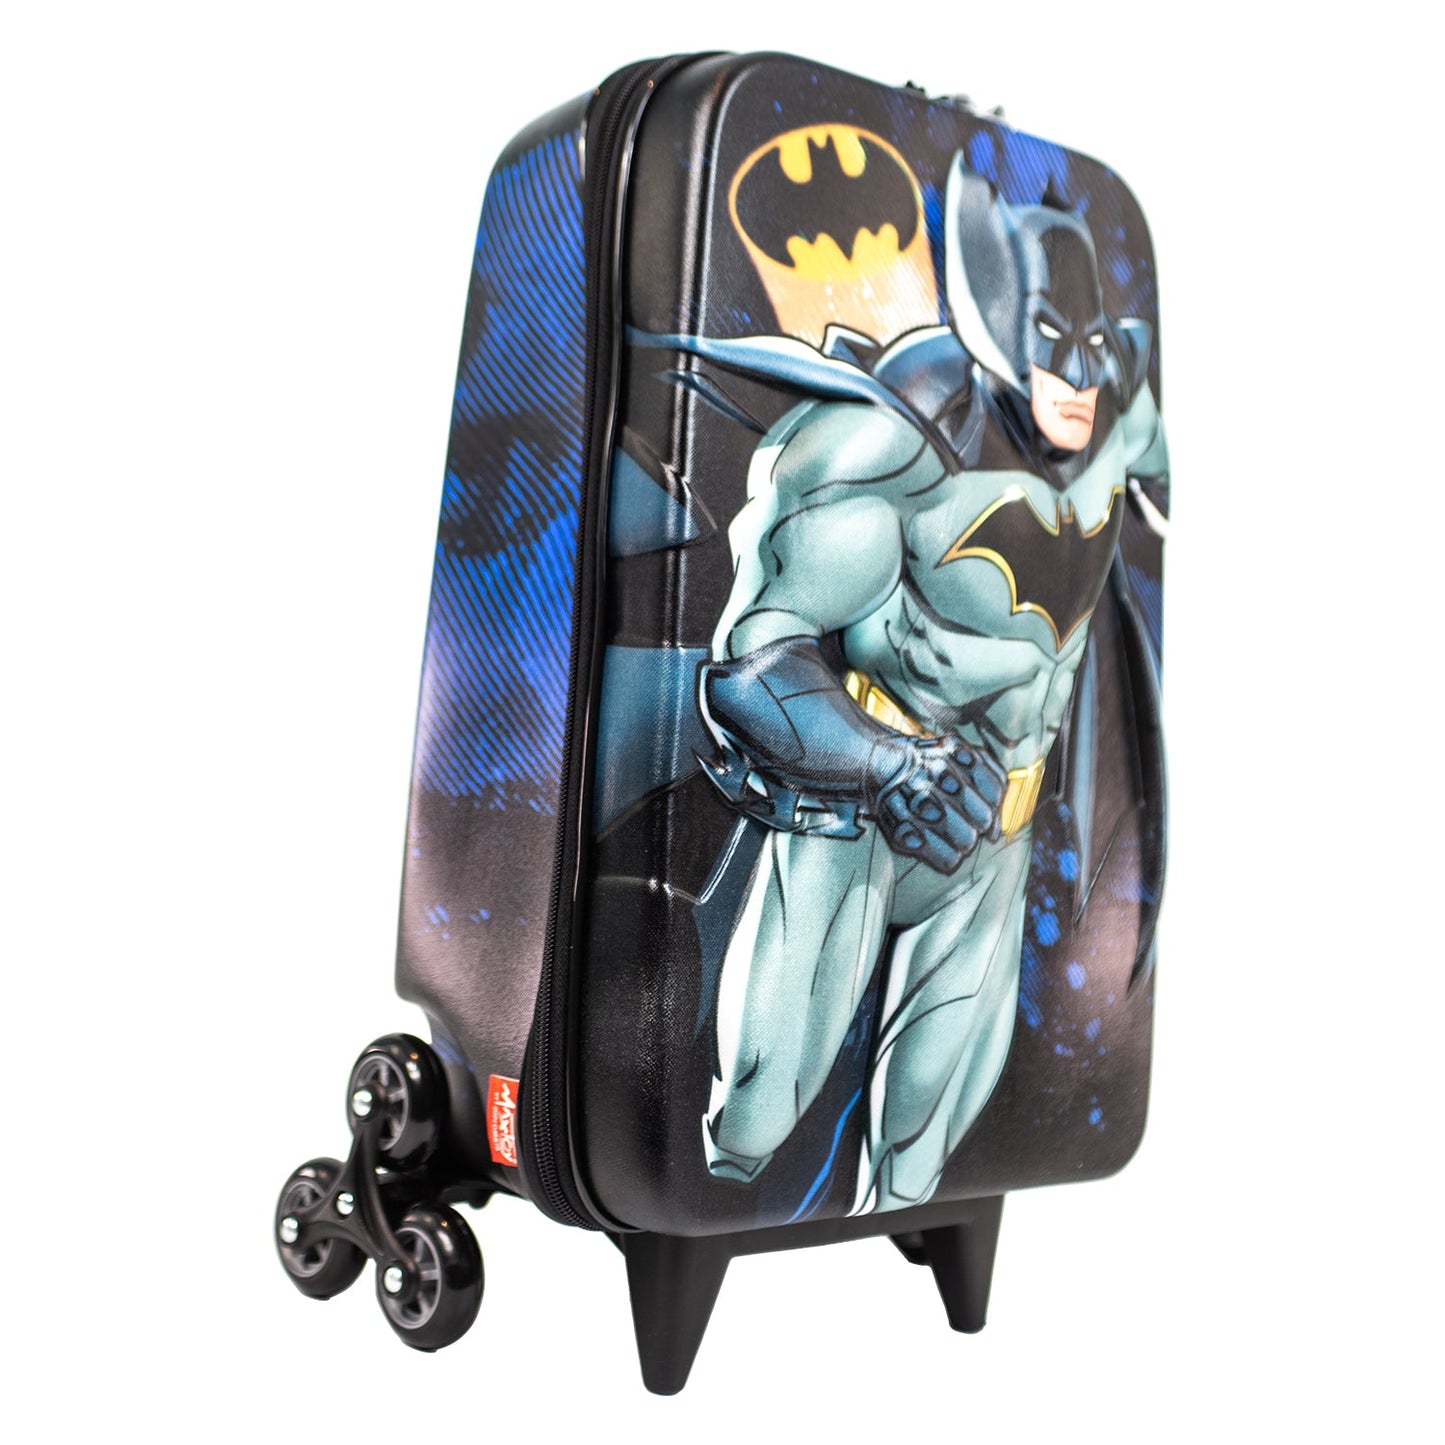 Batman Suitcase - Classic